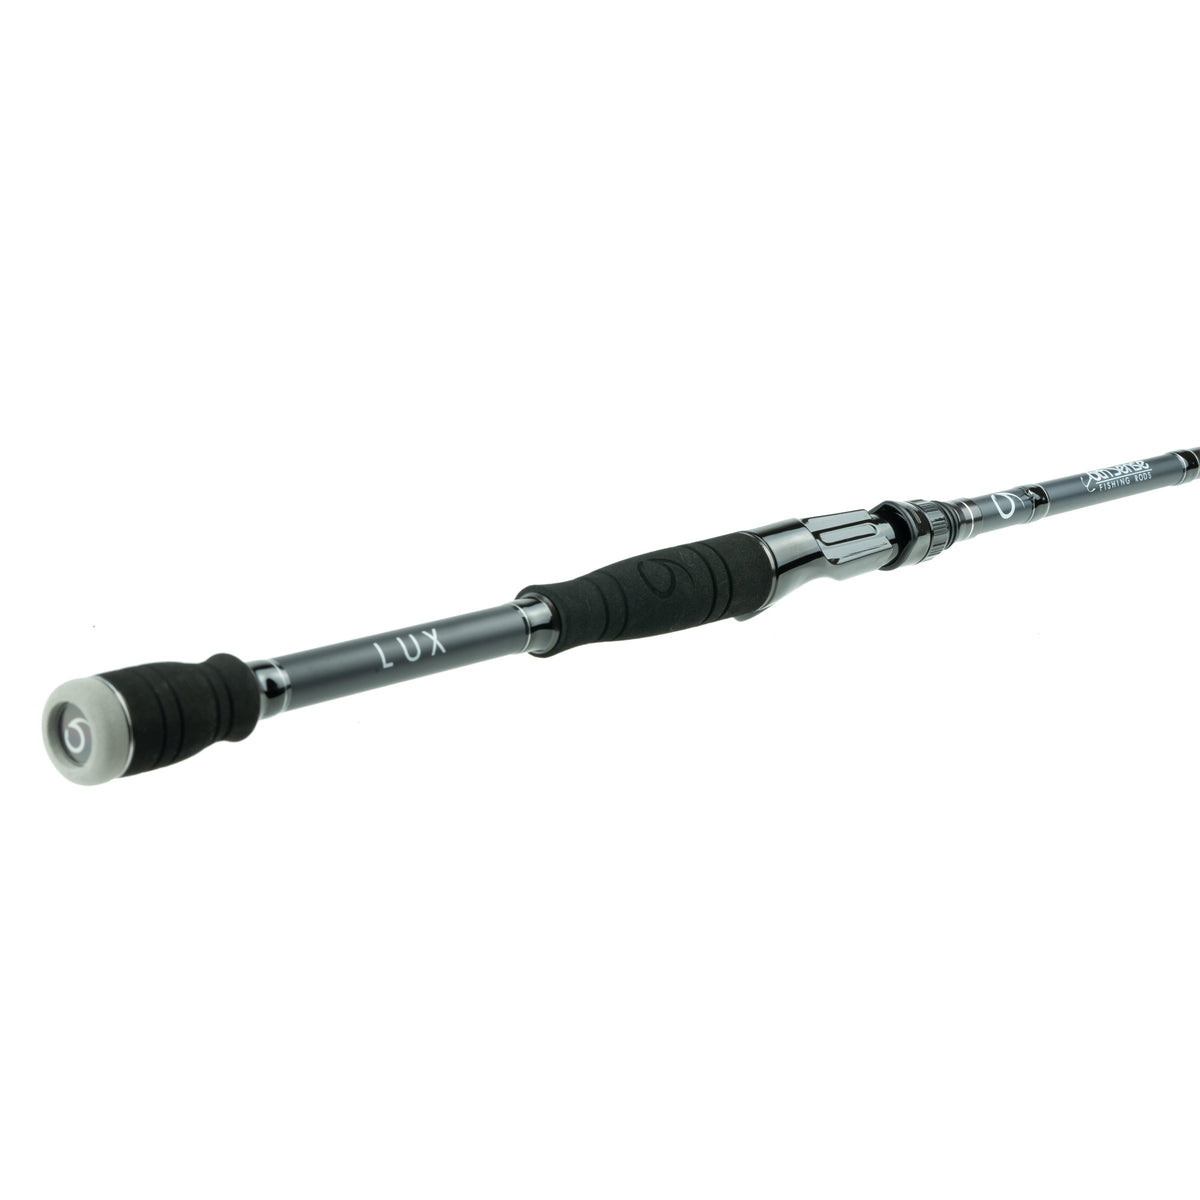 6th Sense Fishing - Lux Rod 7'5 Heavy, Mod Fast